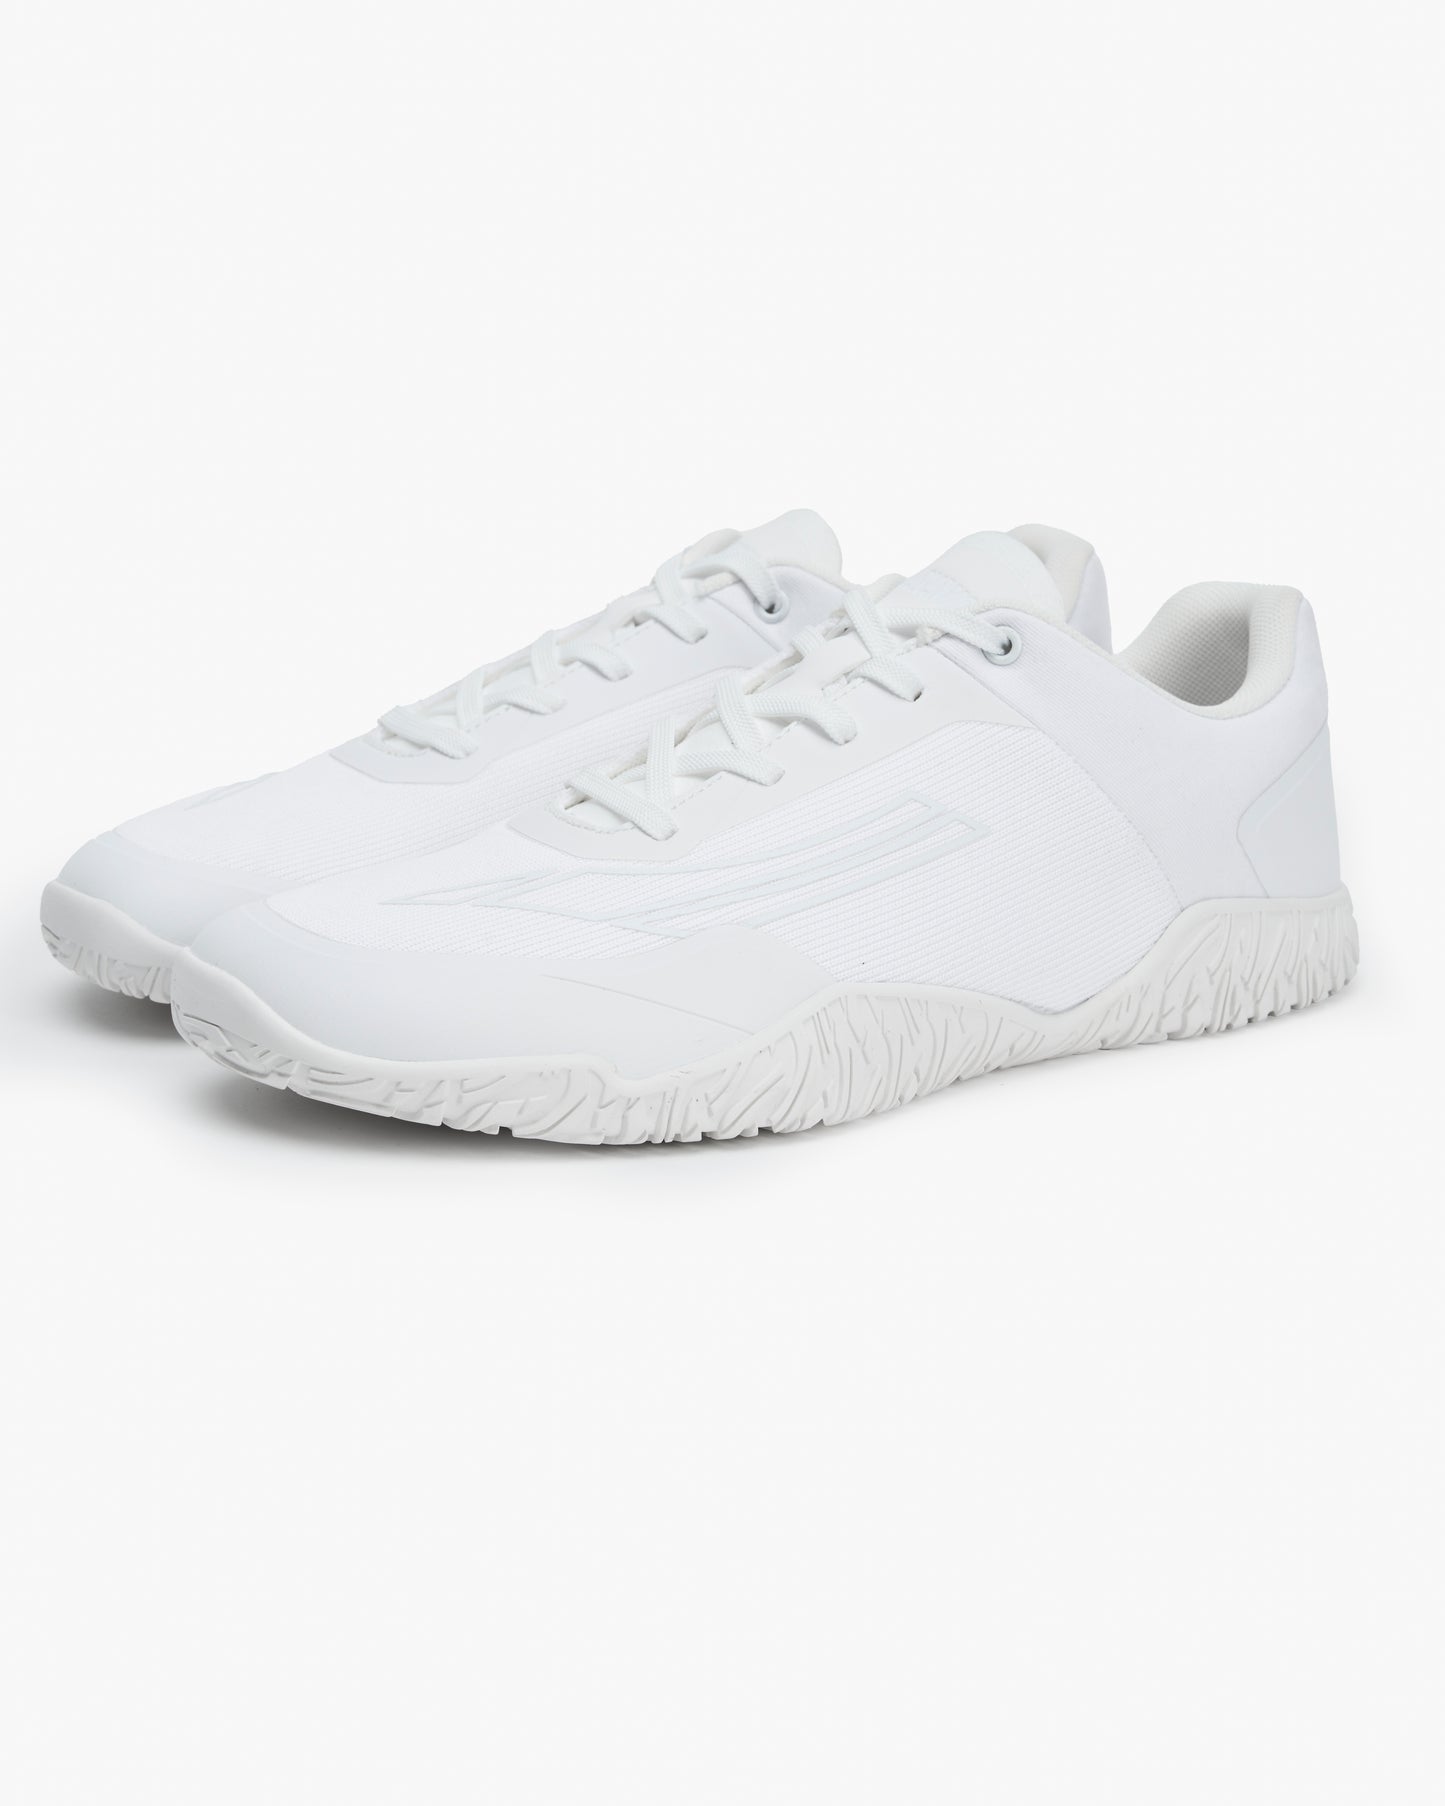 Avancus Apex Power Shoes 1.5 (White)